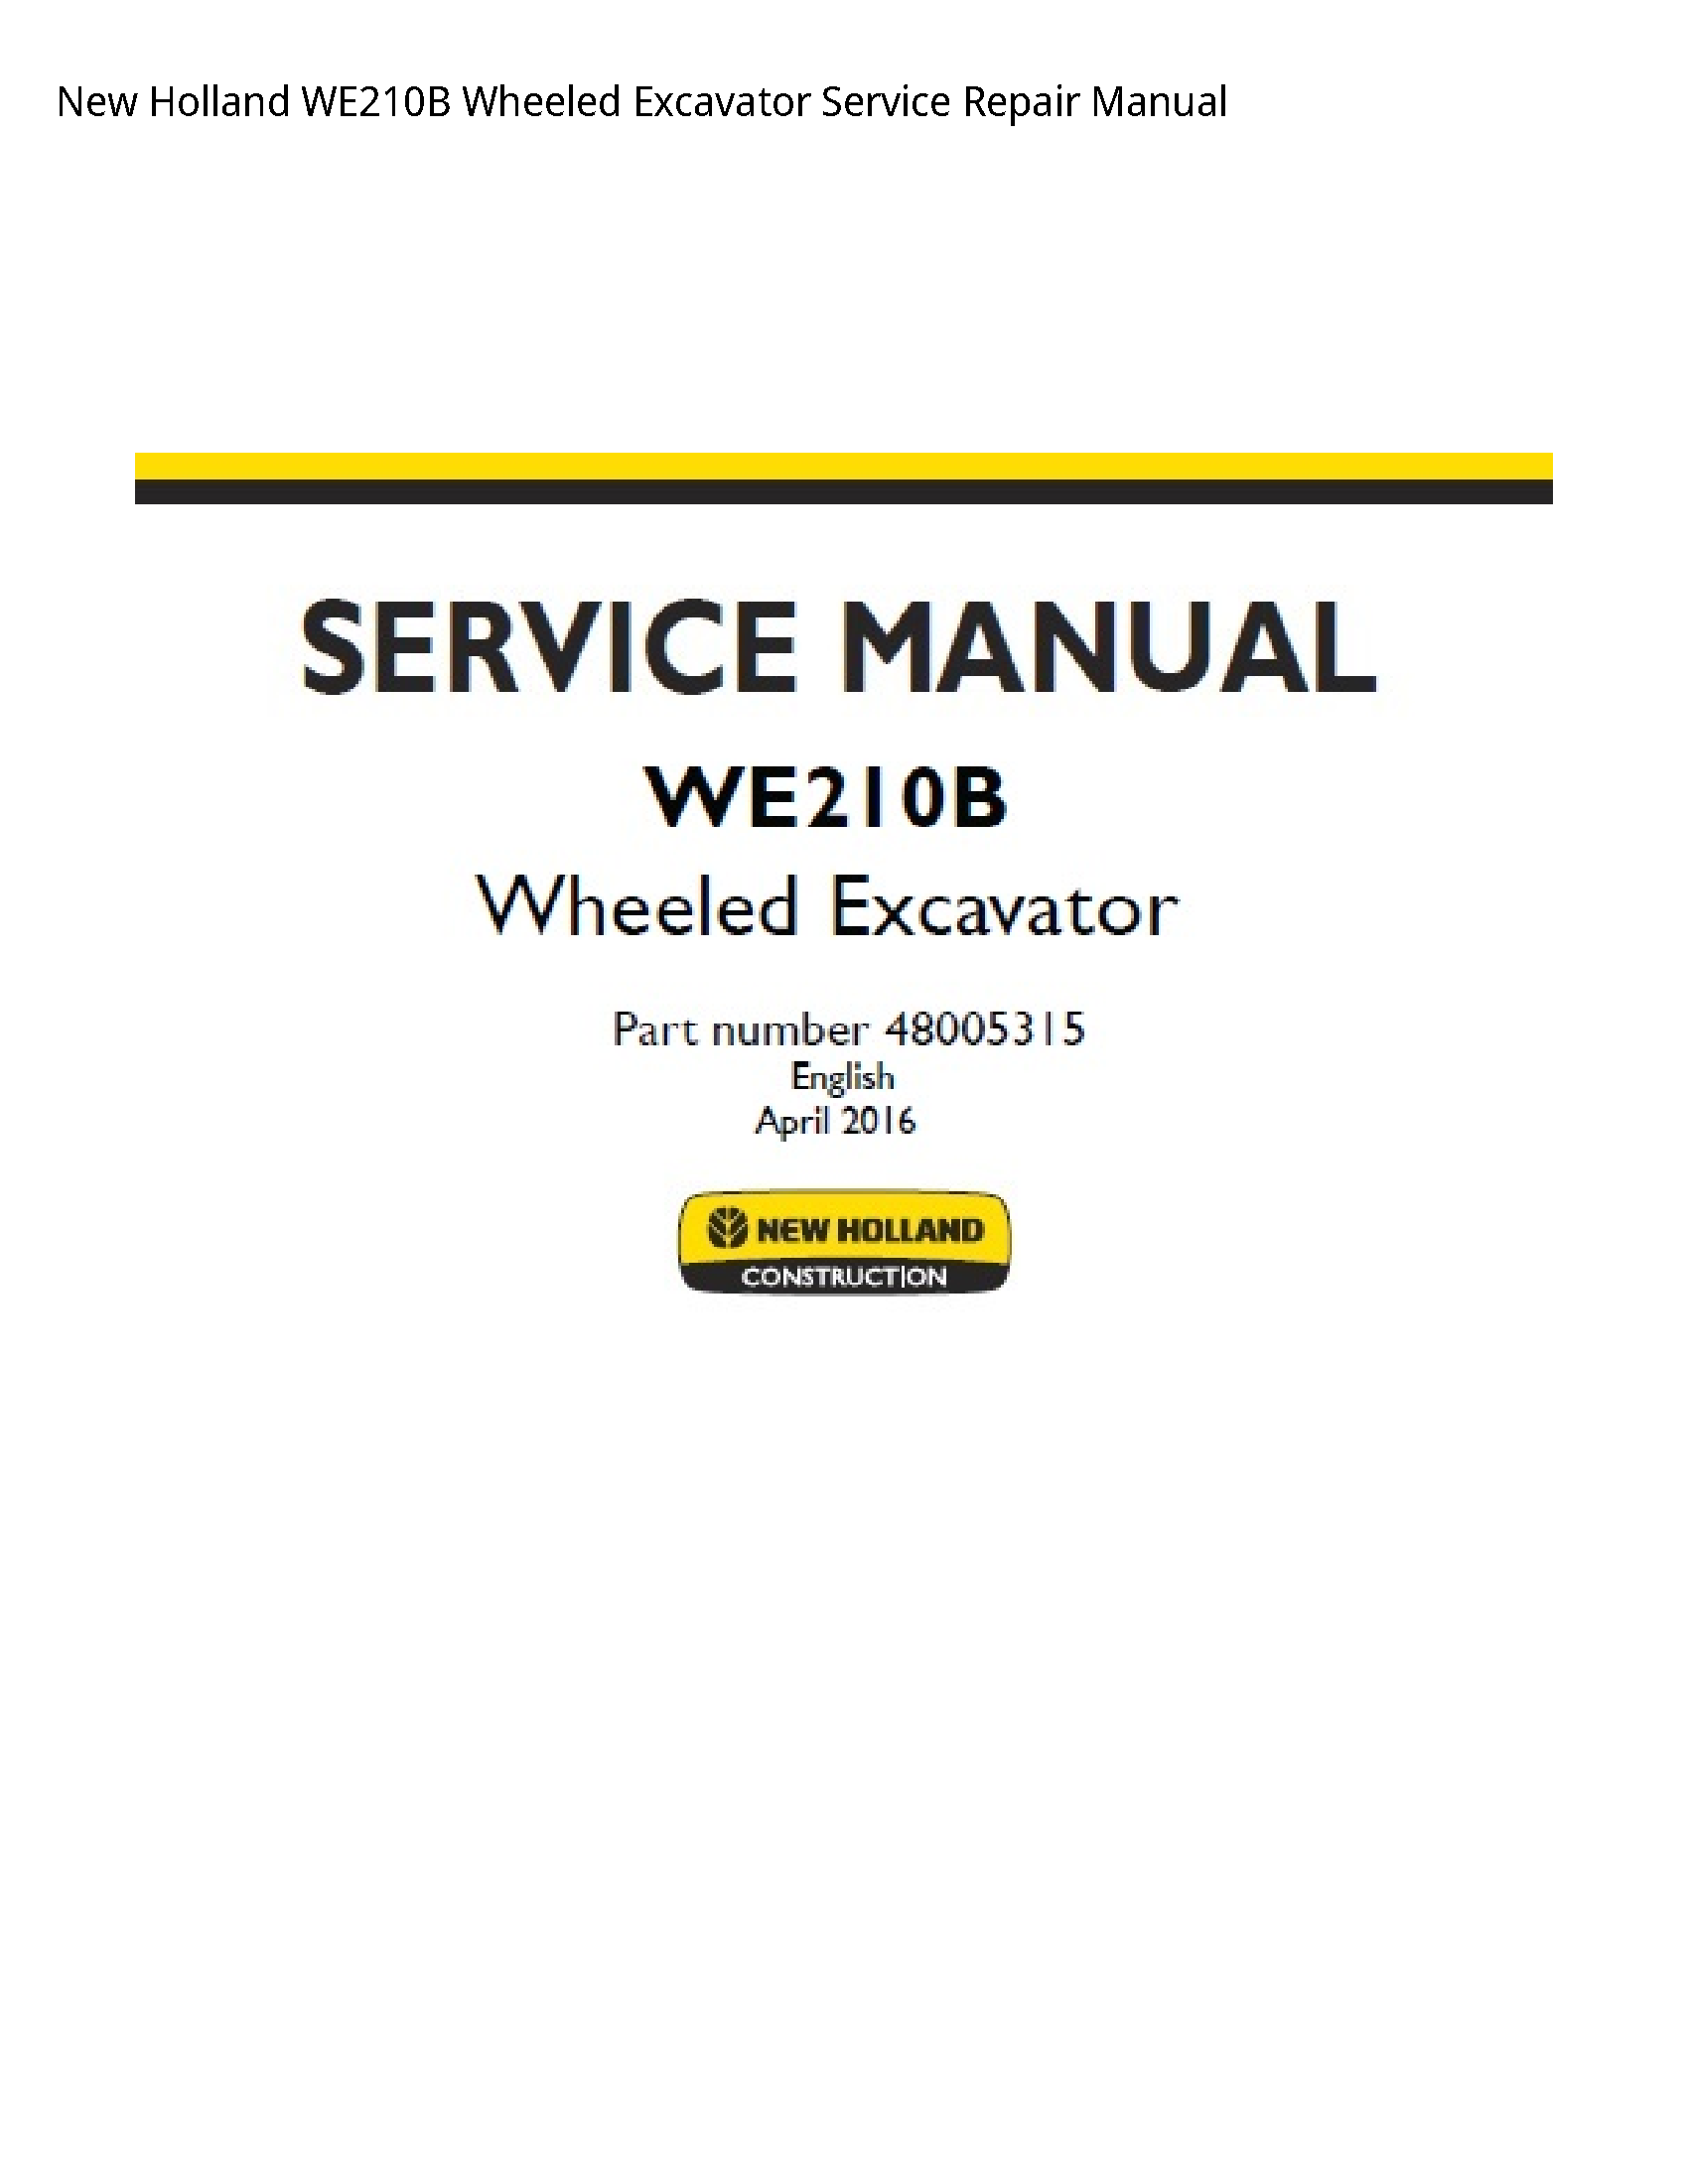 New Holland WE210B Wheeled Excavator manual